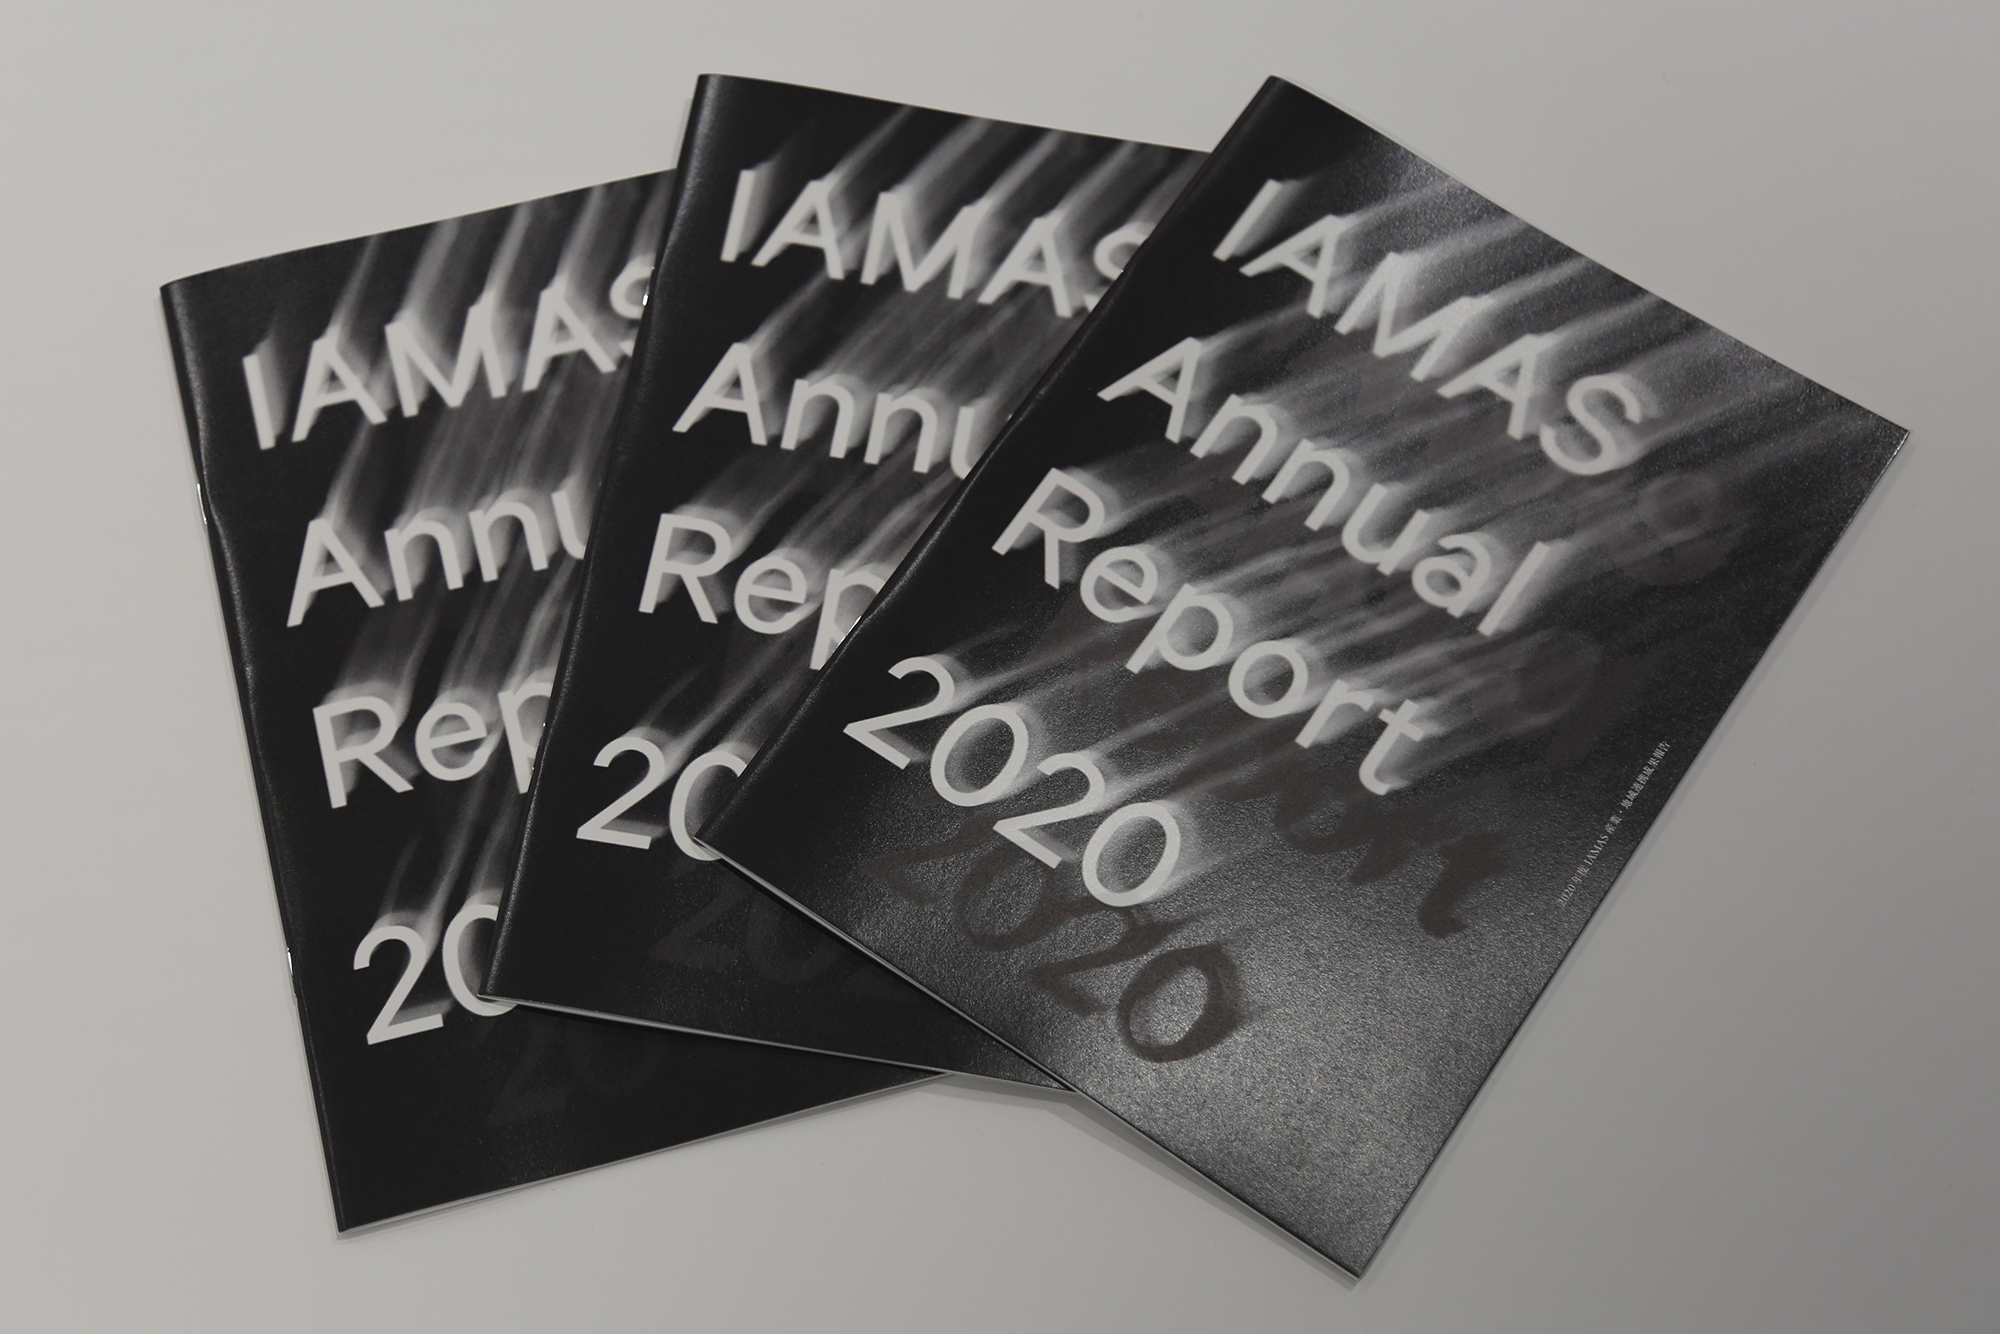 IAMAS Annual Report 2020 産業・地域連携成果報告書イメージ